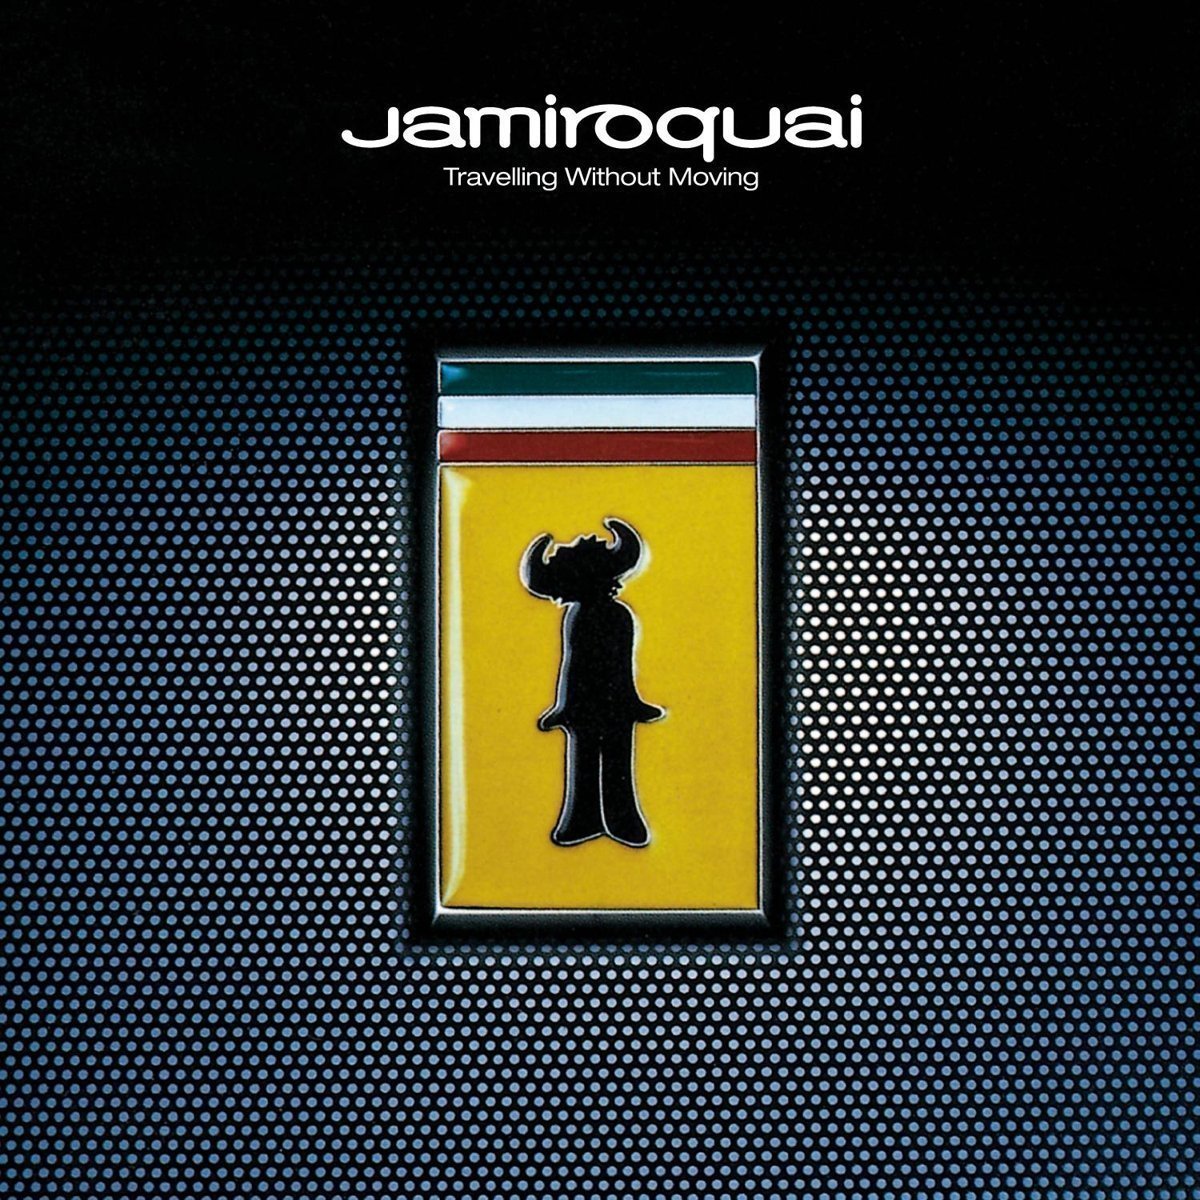 Vinylplade Jamiroquai Travelling Without Moving (2 LP)